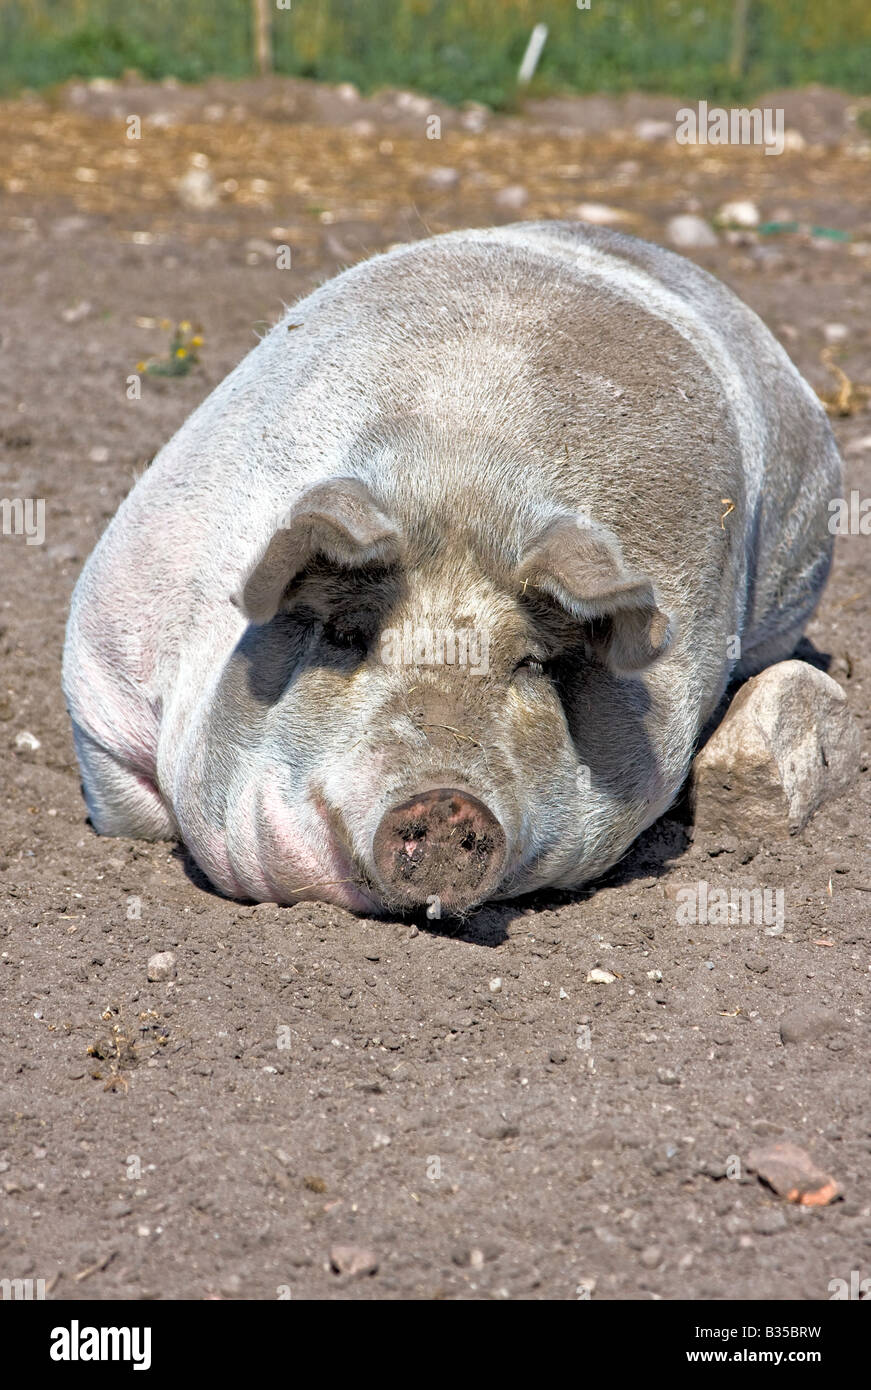 Big dirty pig sleeping sweetly on ground Stock Photo